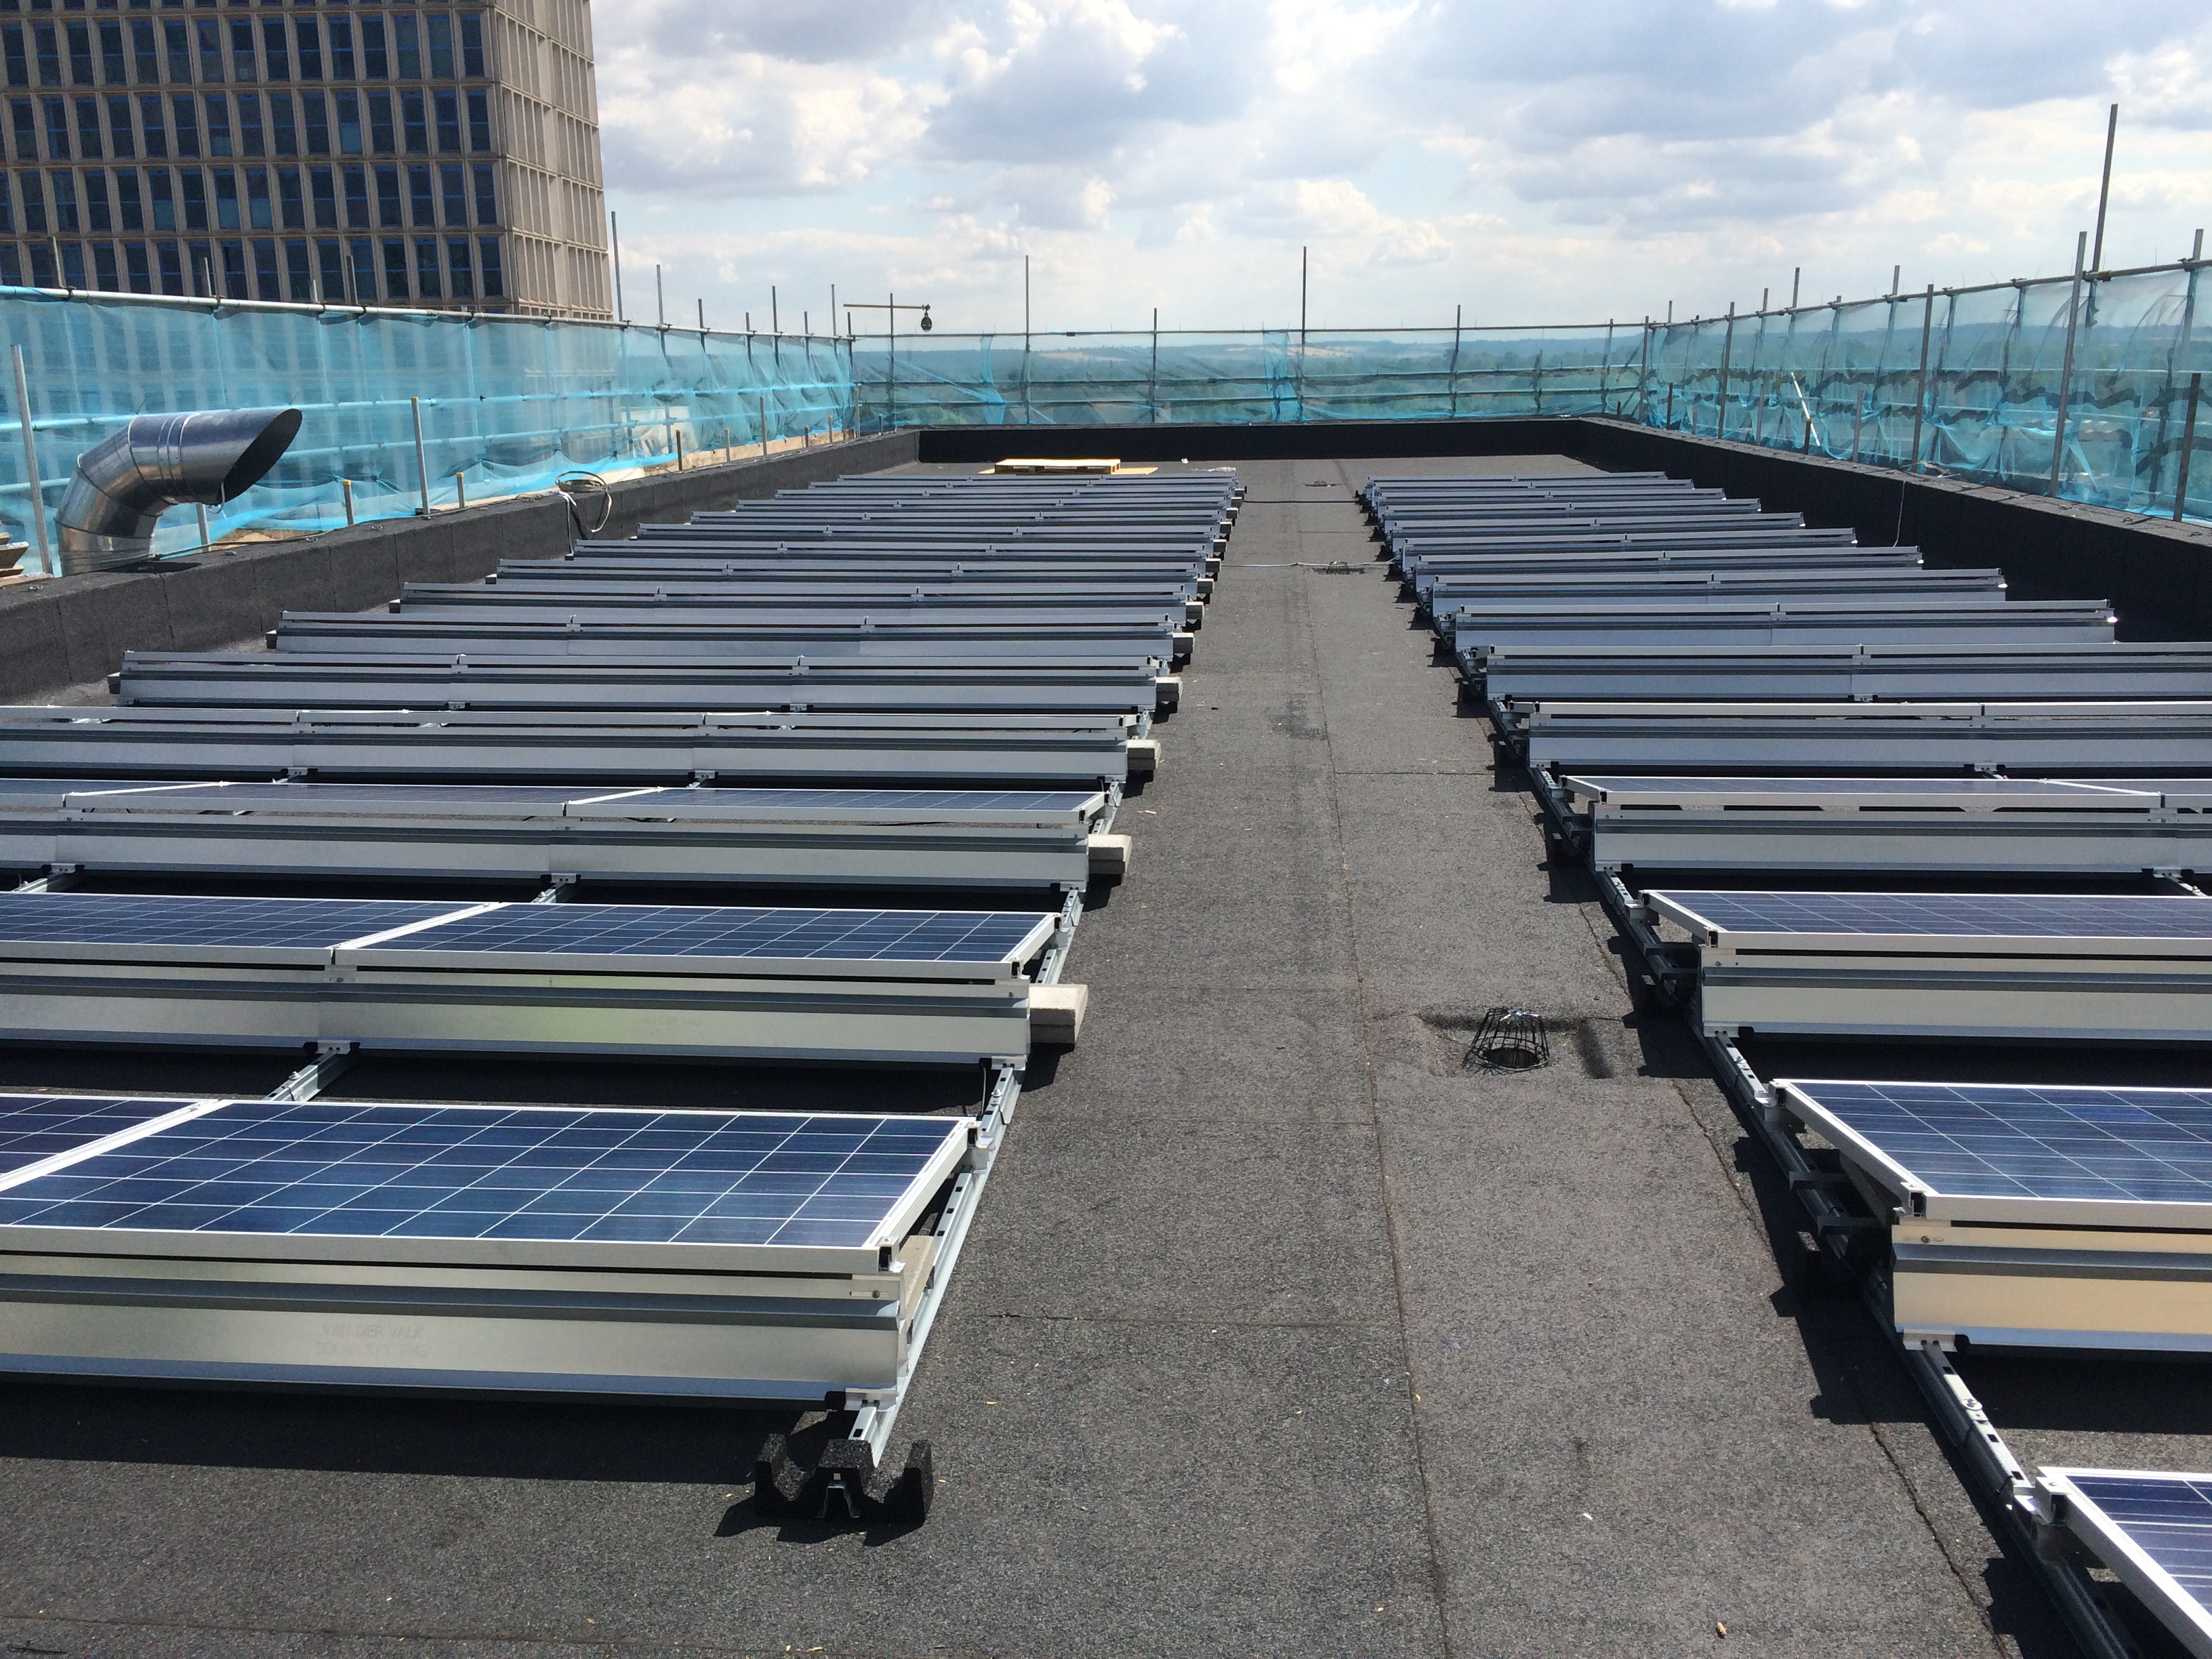 Solar PV Installers England, Bedford, The Bedford Free School, Solar PV, Solar Panels, Commercial Solar PV